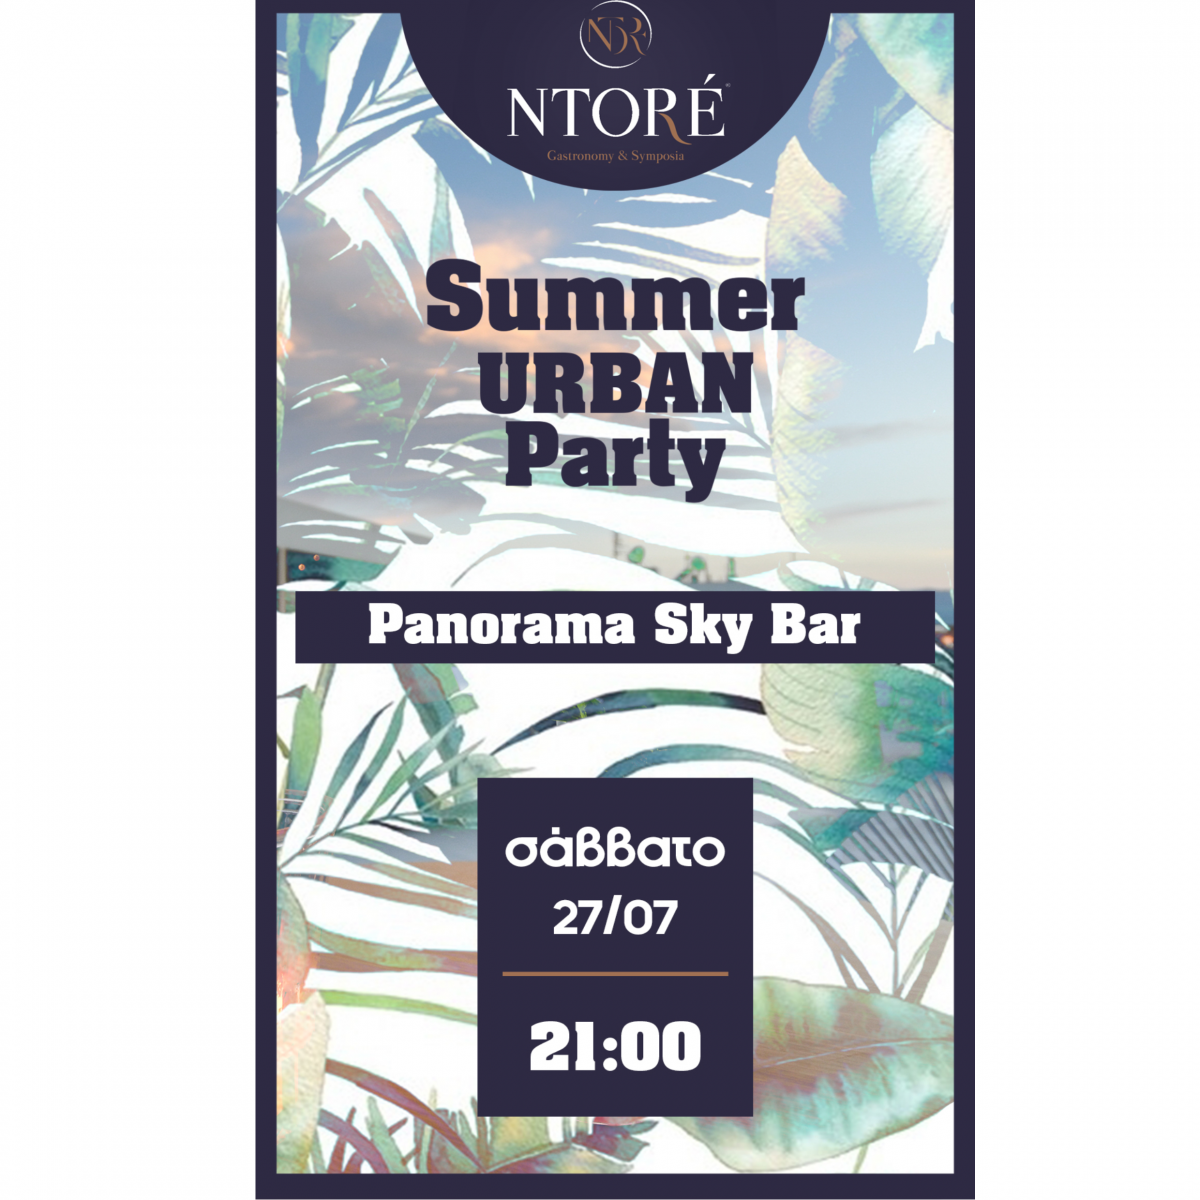 Summer Urban Party, το Σάββατο 27/07 στο Panorama Sky Bar